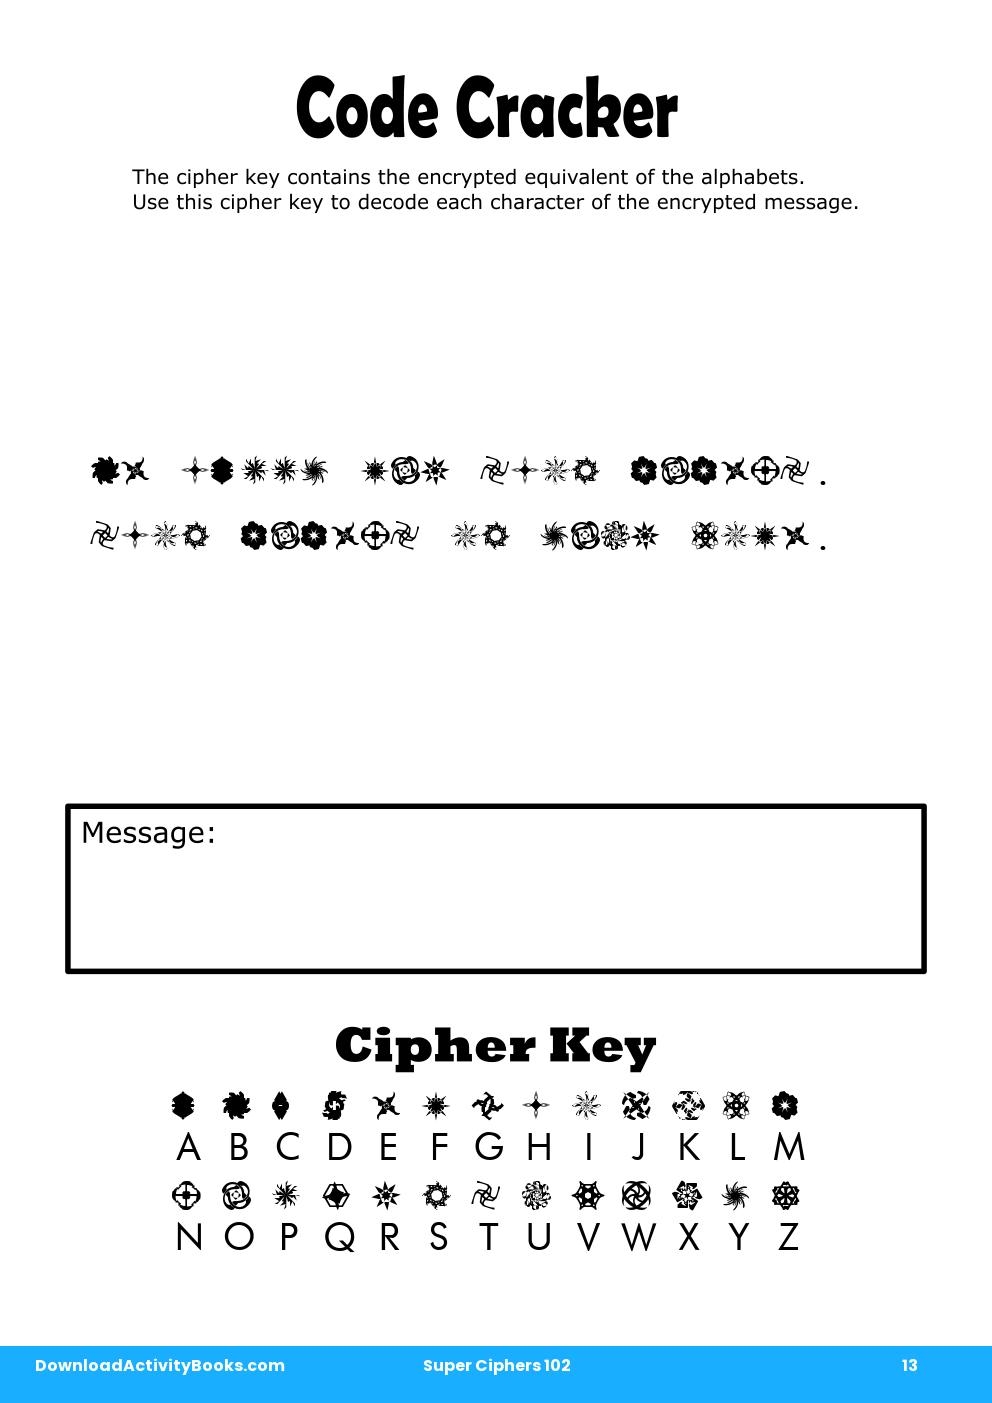 Code Cracker in Super Ciphers 102